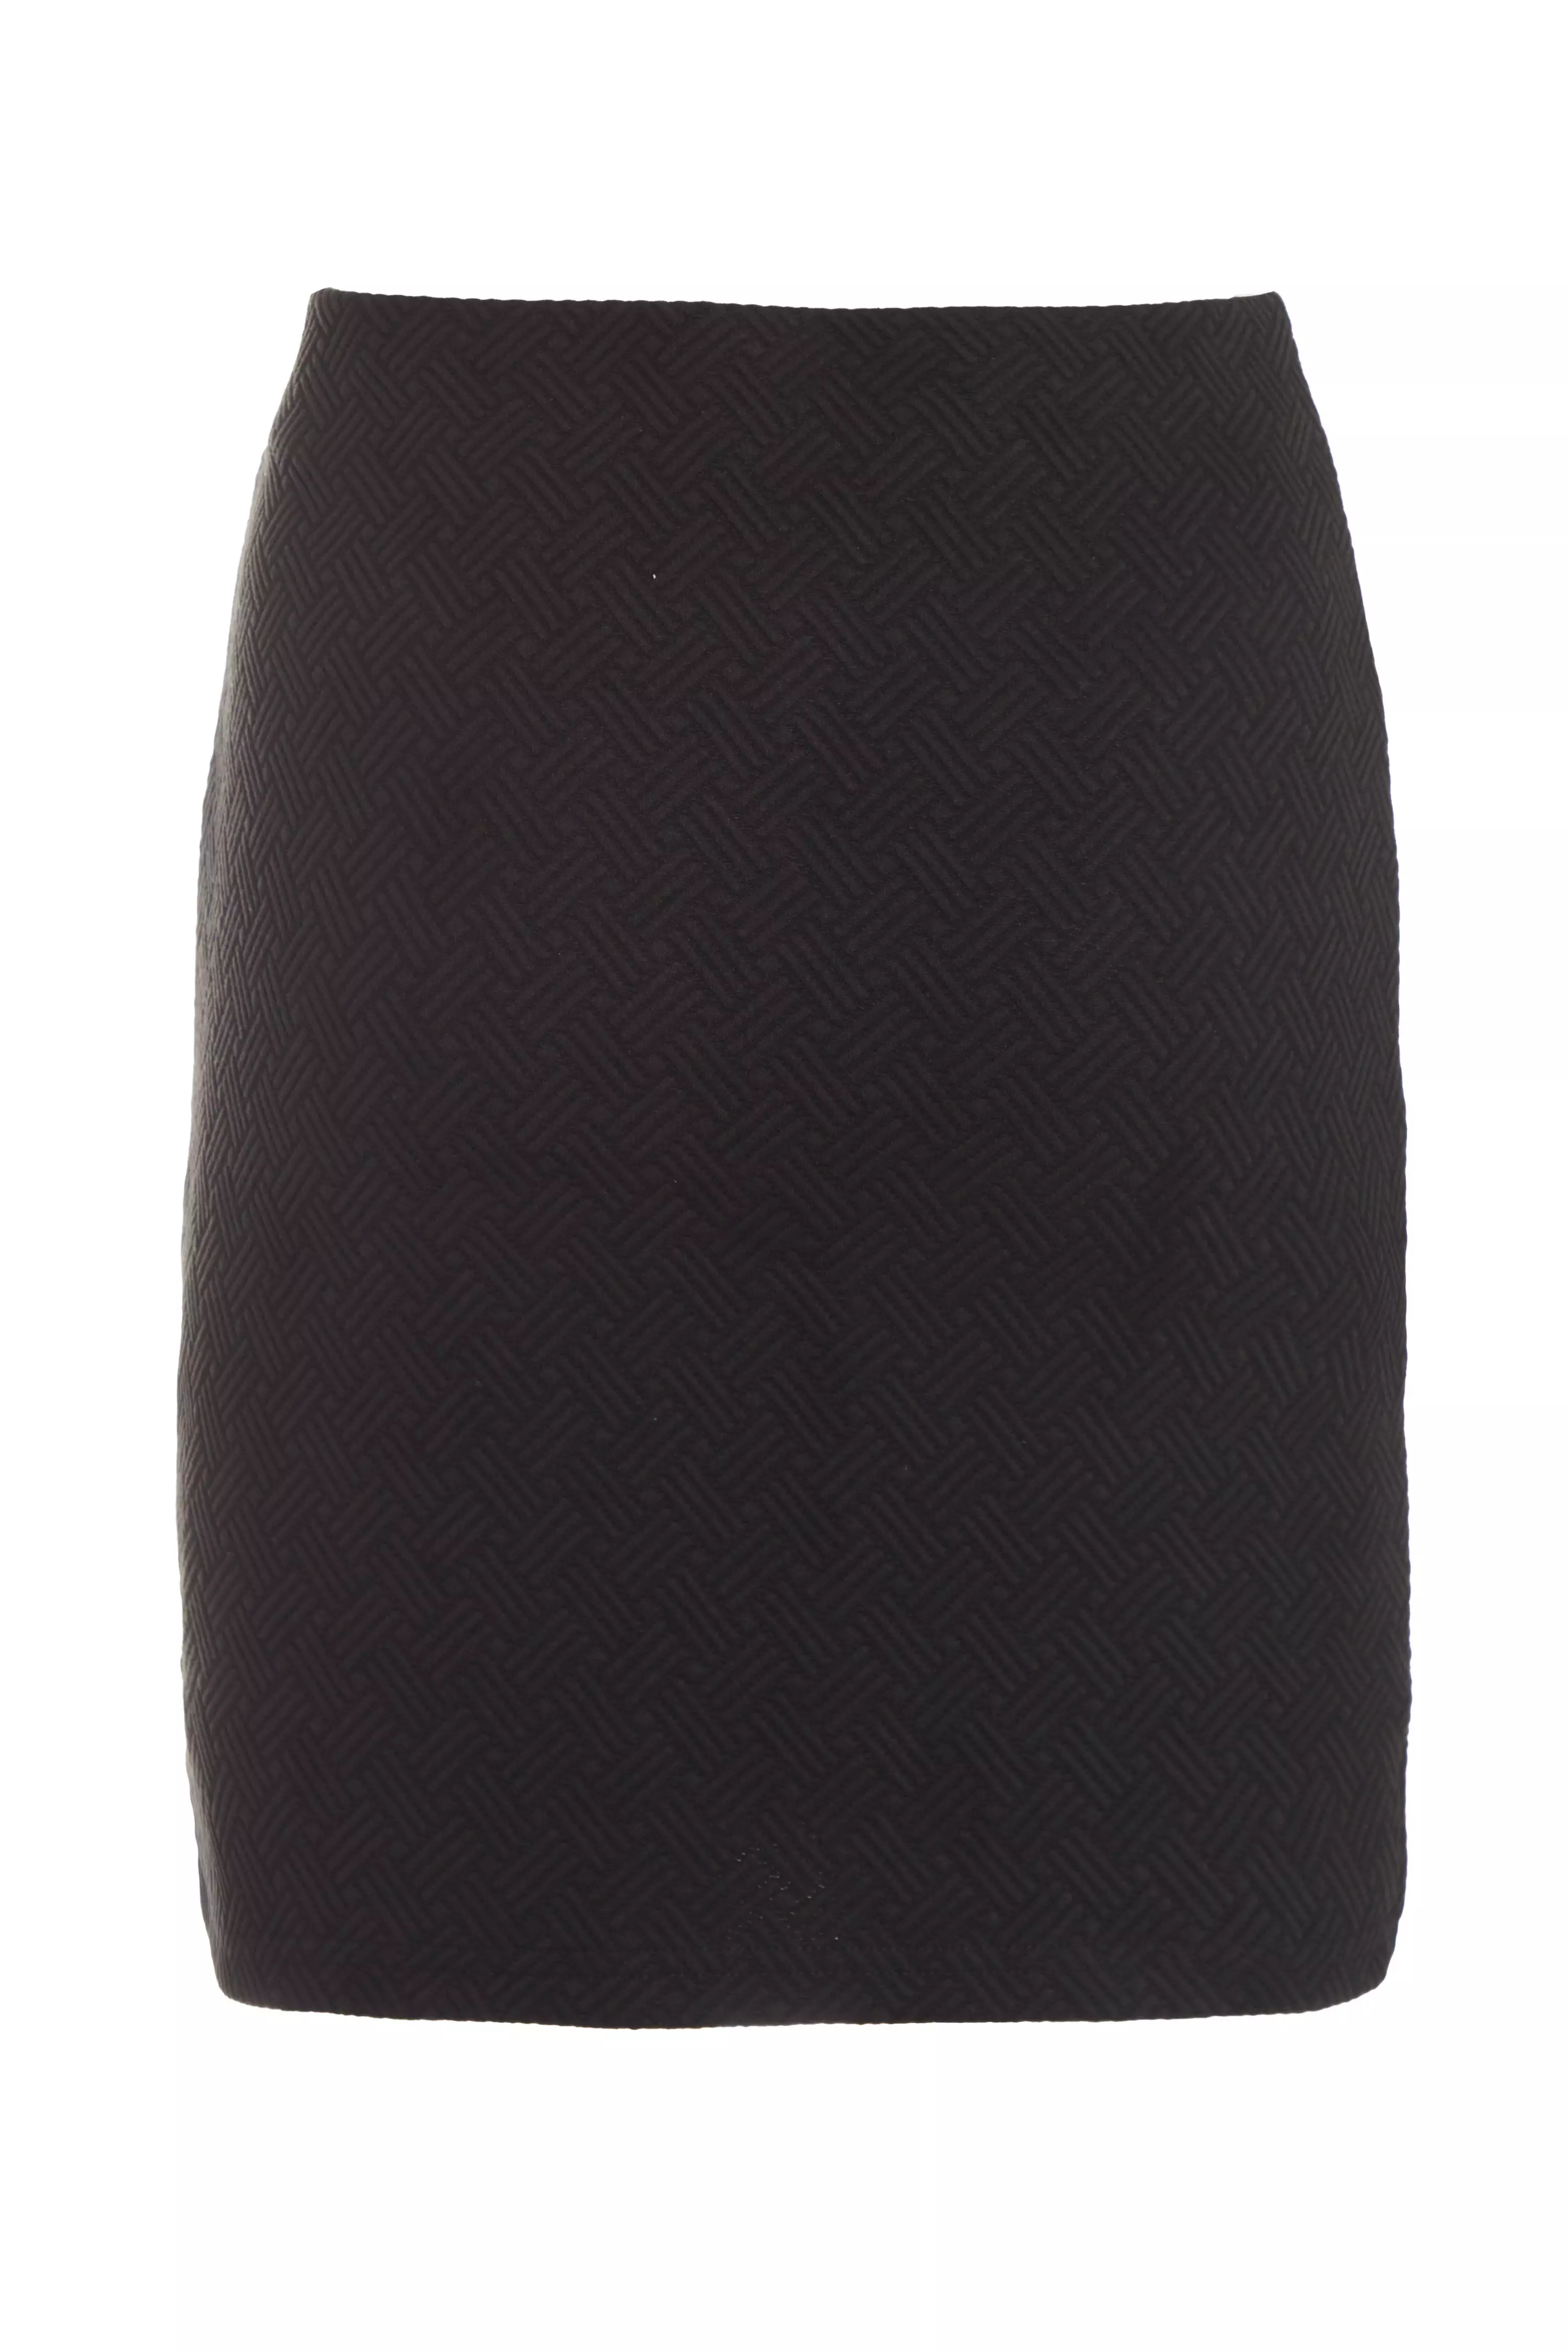 Black Crossover Textured Bodycon Mini Skirt - QUIZ Clothing